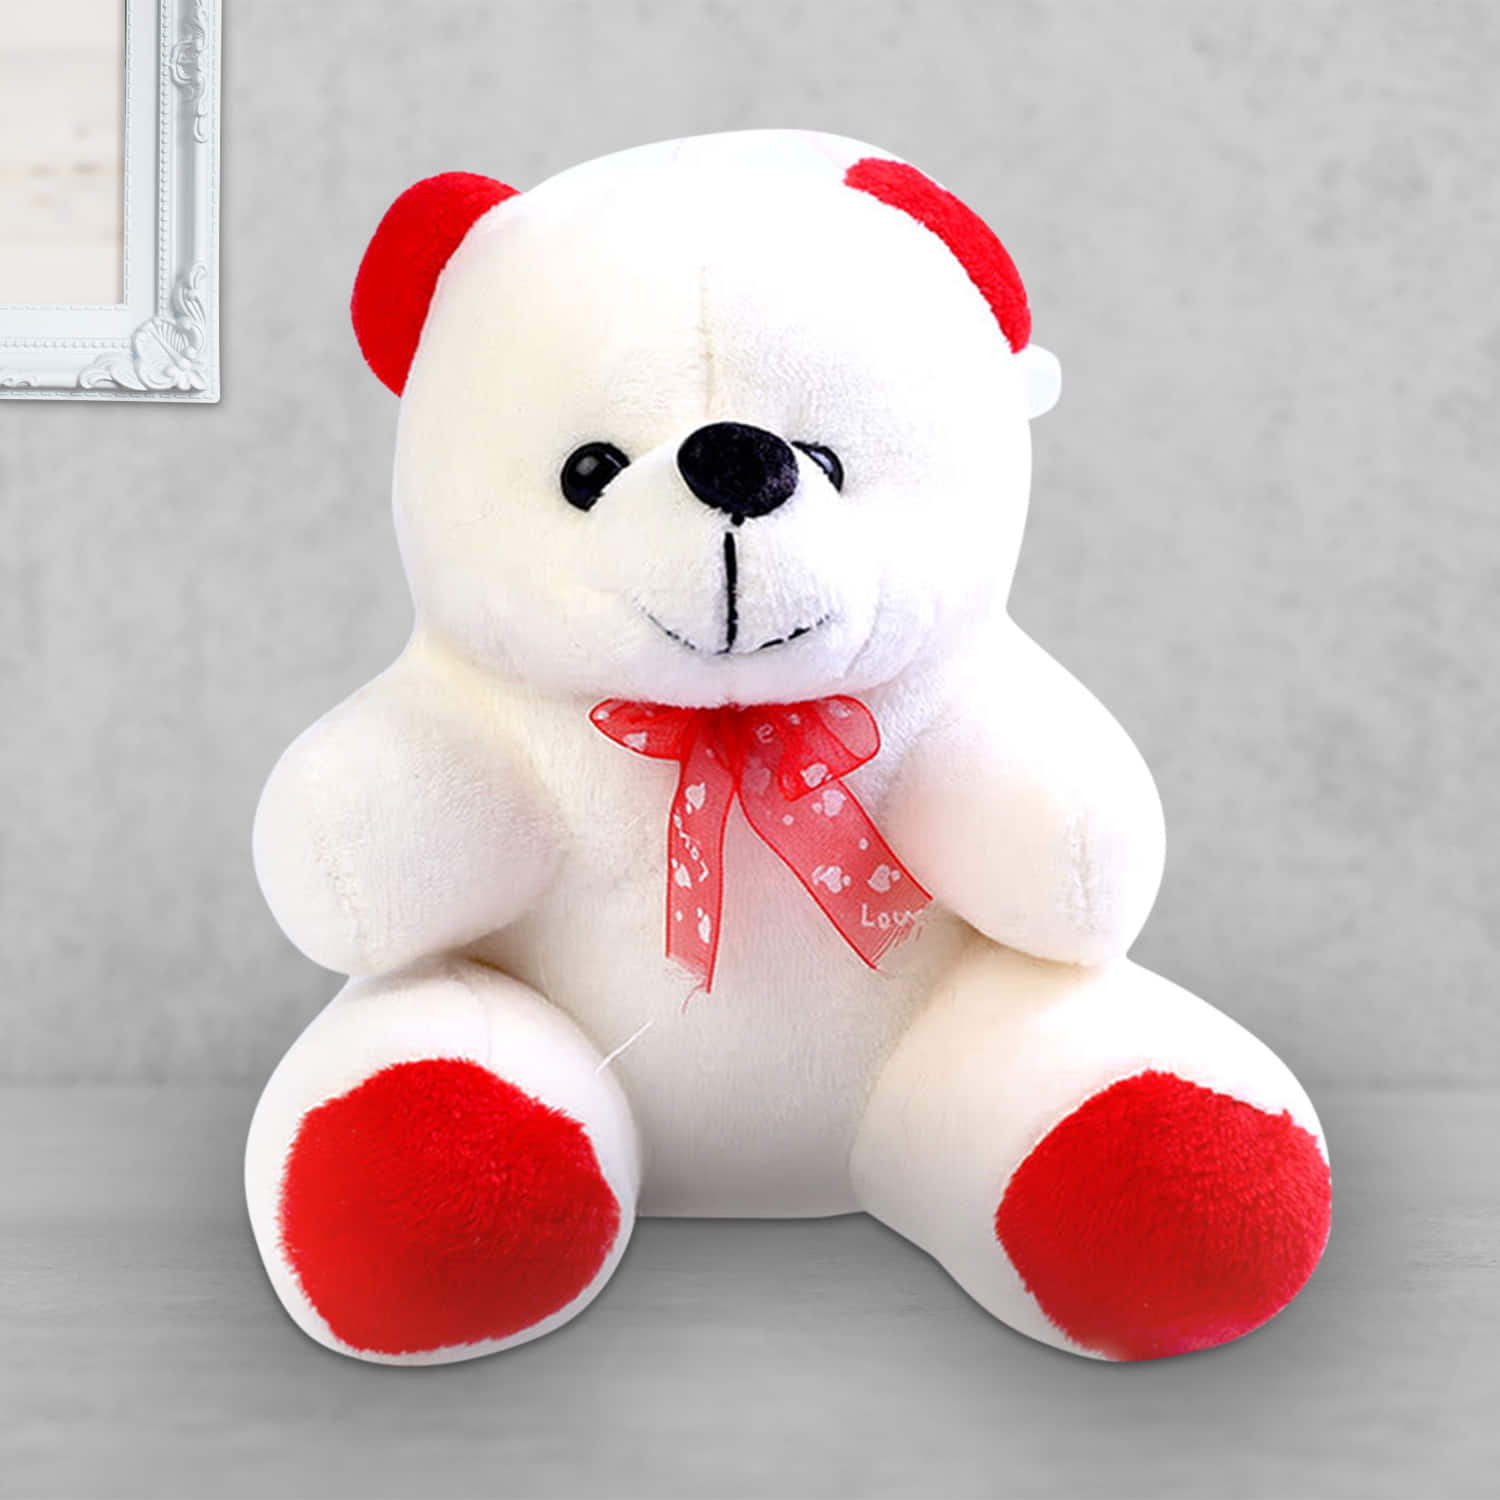 Beautiful Small Gift Cute Teddy Bear Stock Photo 708895234 | Shutterstock